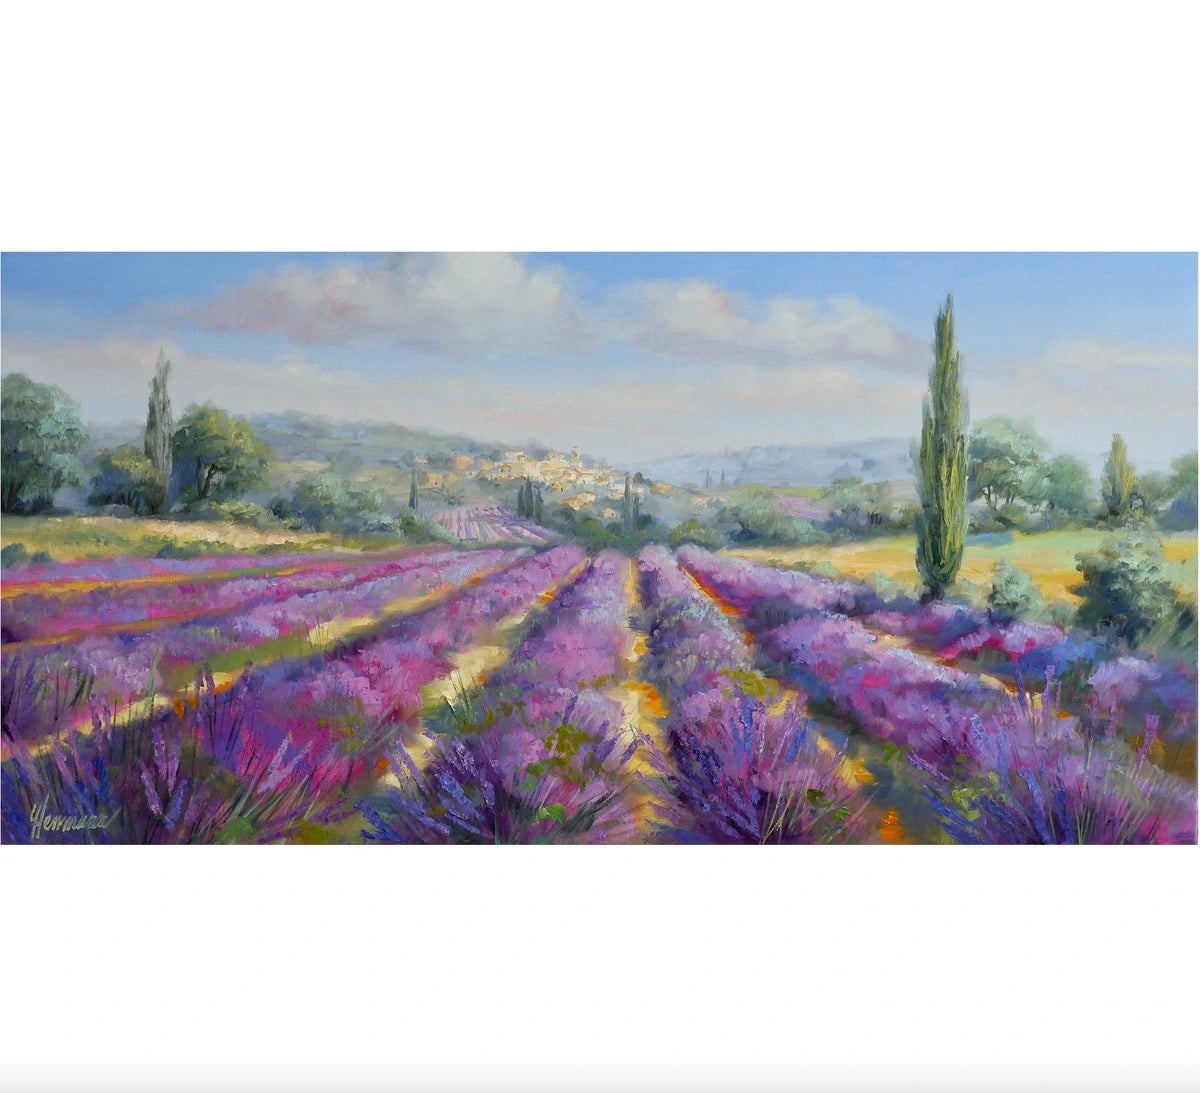 Ute Herrmann - Rows of lavender in the Luberon